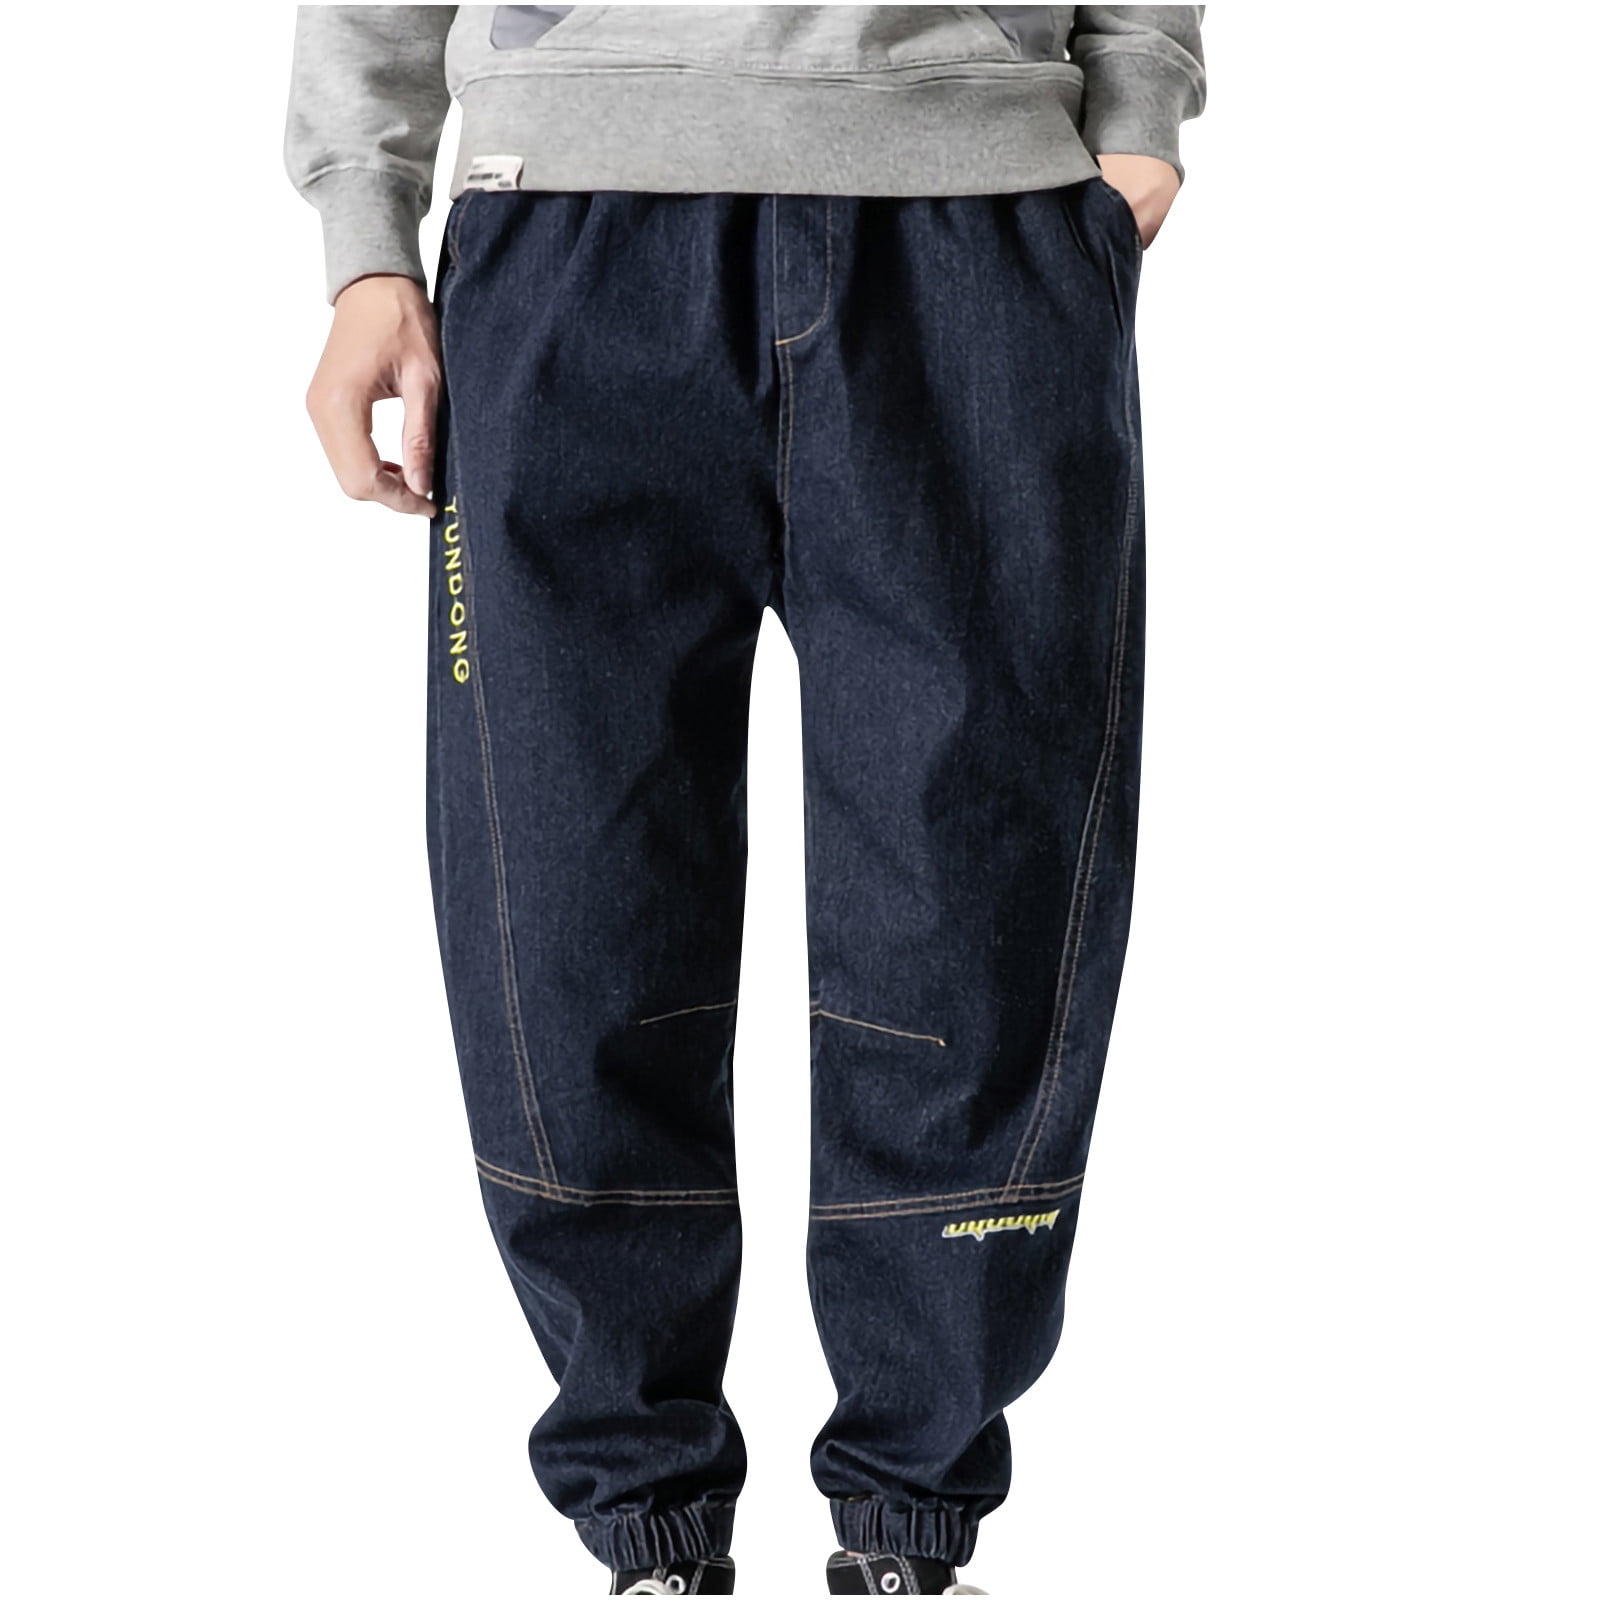 Naruto Logo Teen Youth Boys Girls Jogger Pants Athletic Pants Cotton Drawstring Elastic Sweatpants with Pockets 